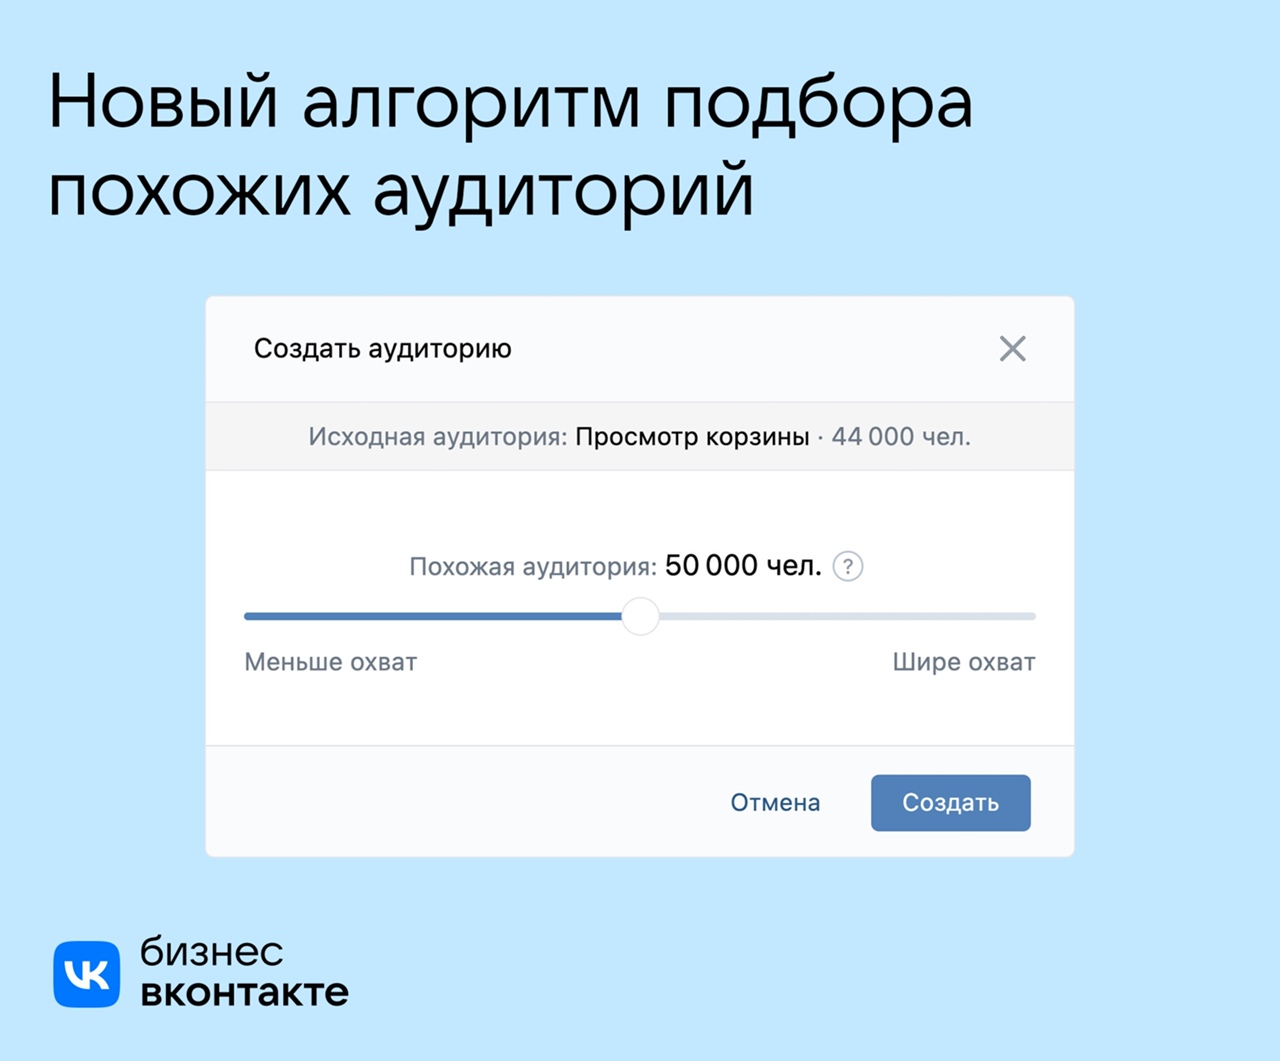 «ВКонтакте» обновил алгоритм подбора похожих аудиторий